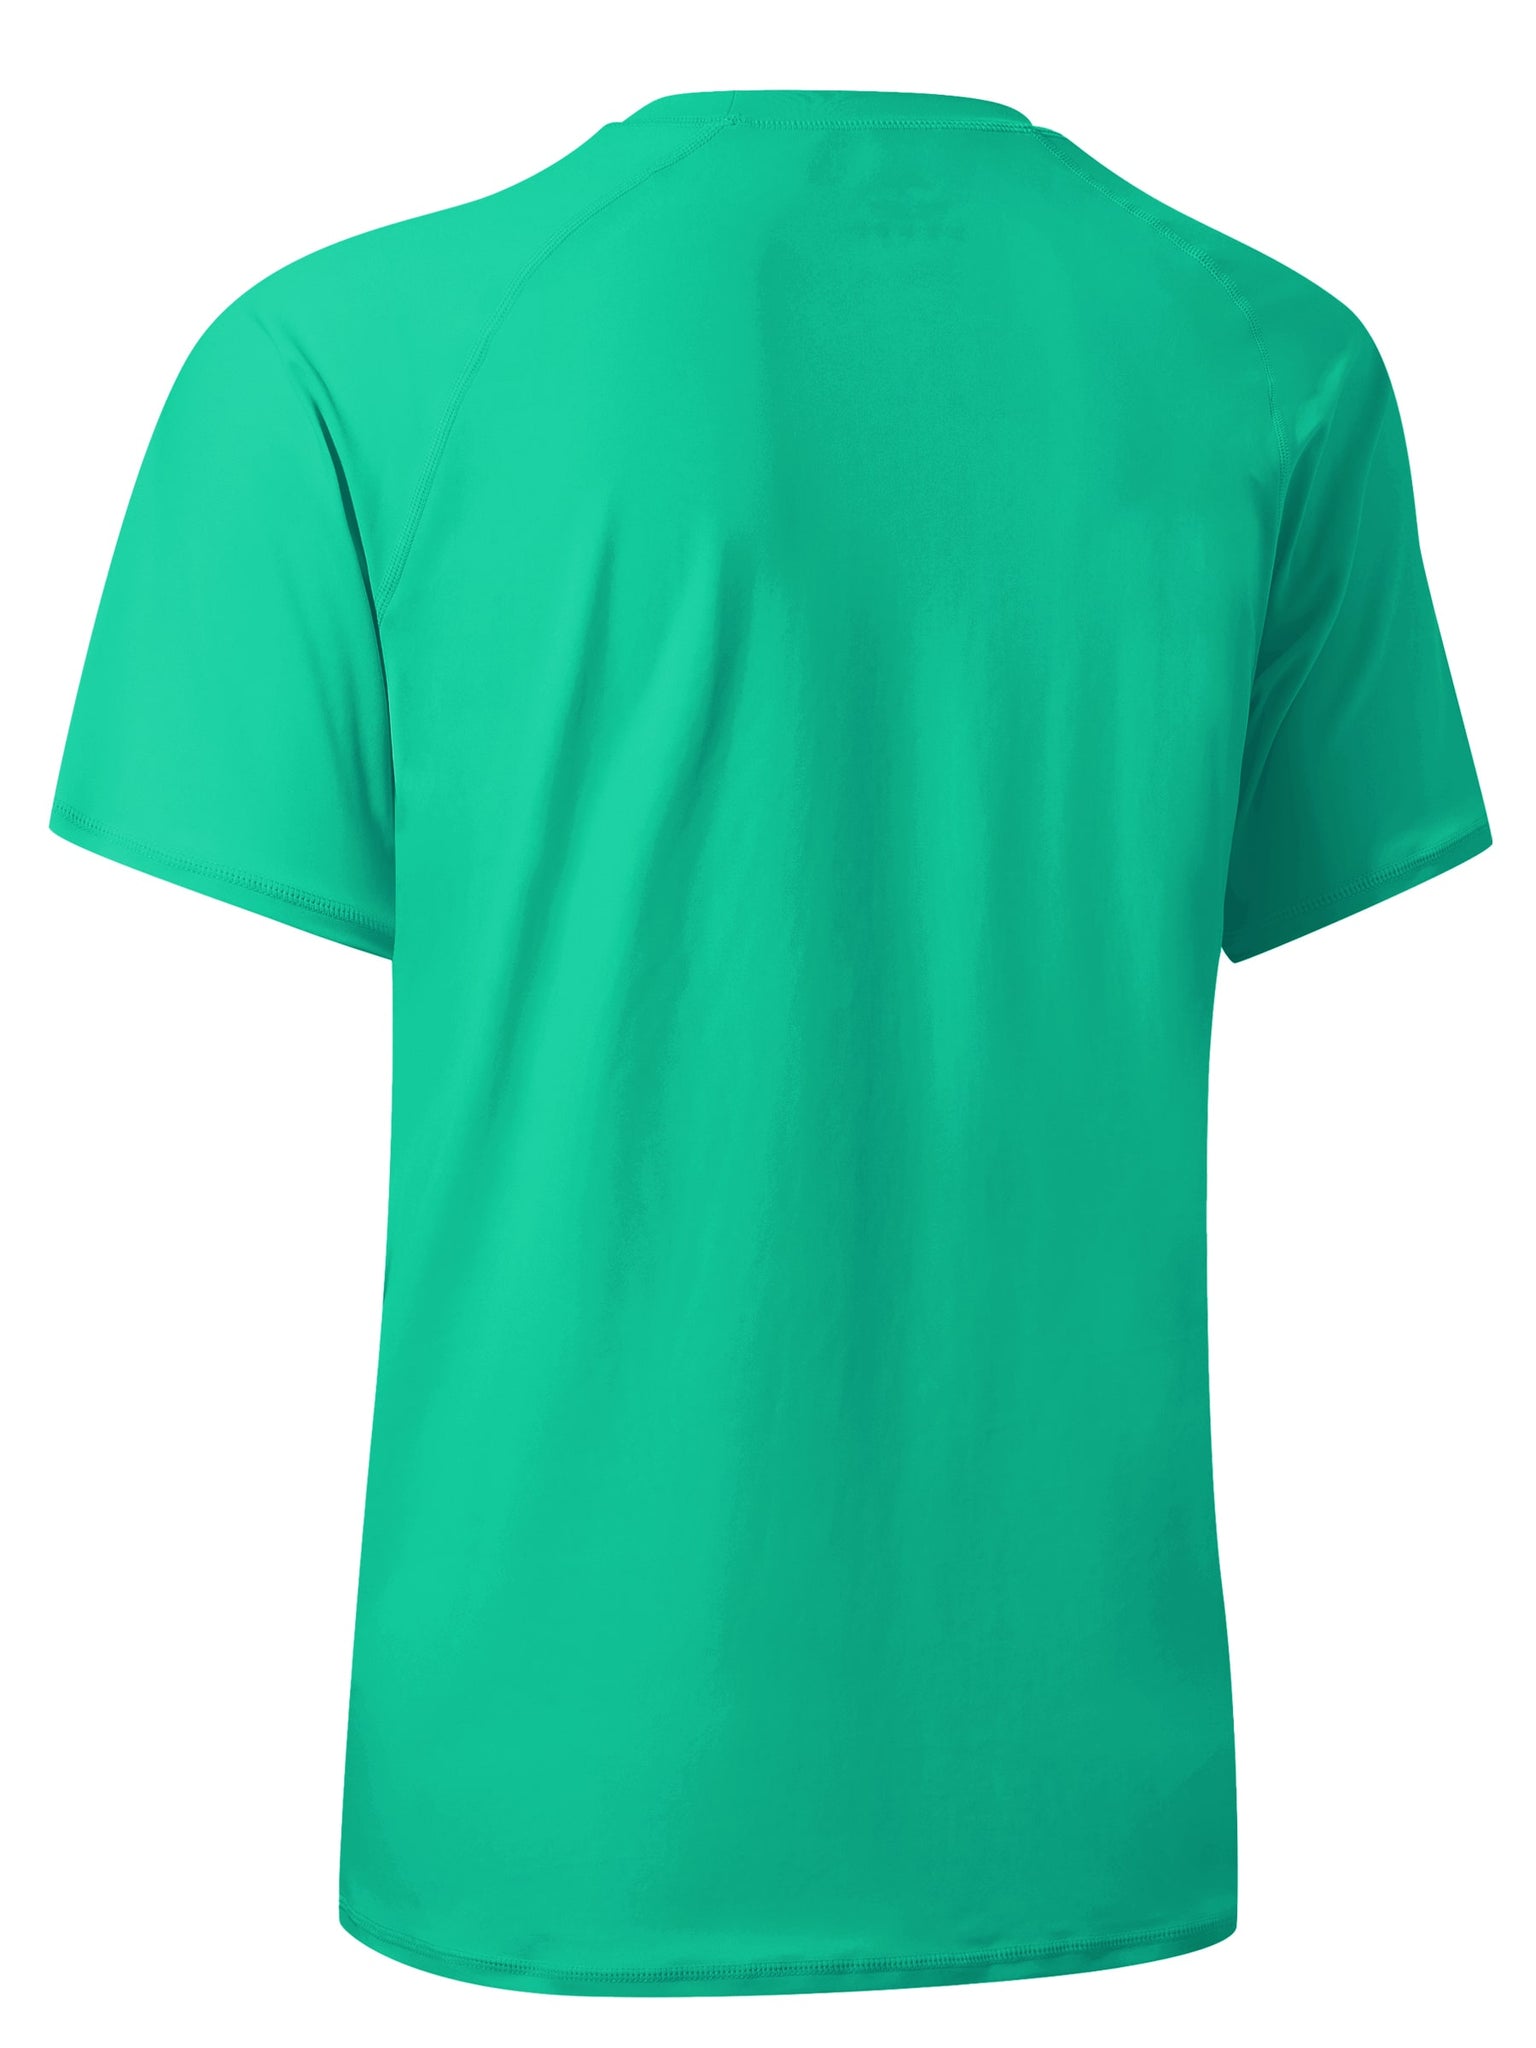 Men's Sun Protection Short Sleeve Shirt_DeepGray_detail2